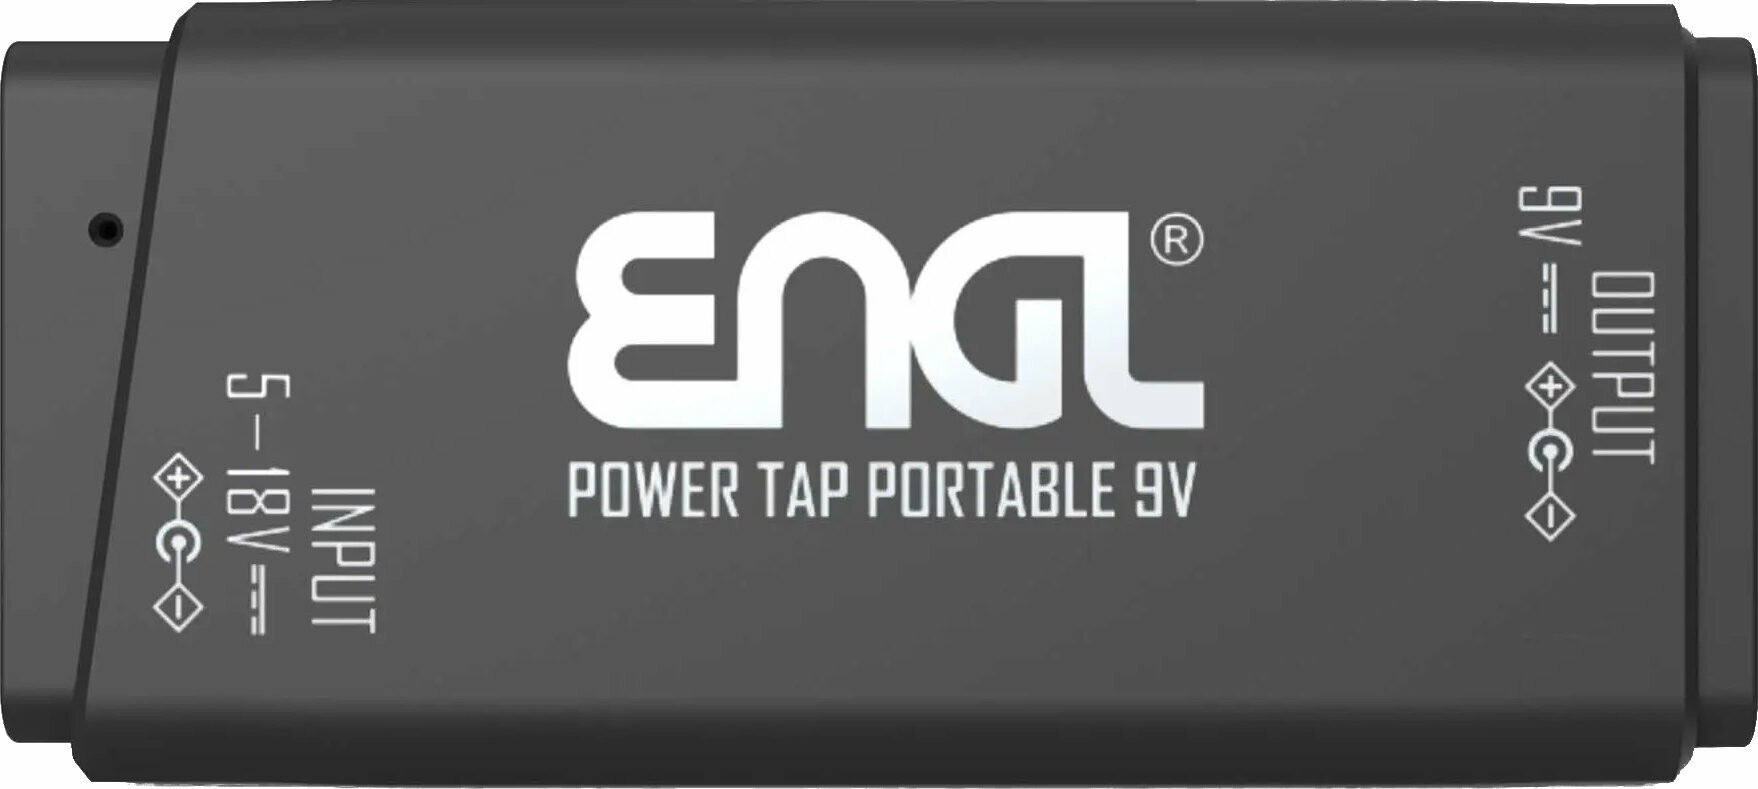 Alimentatore Engl Power Tap Portable / USB to 9V